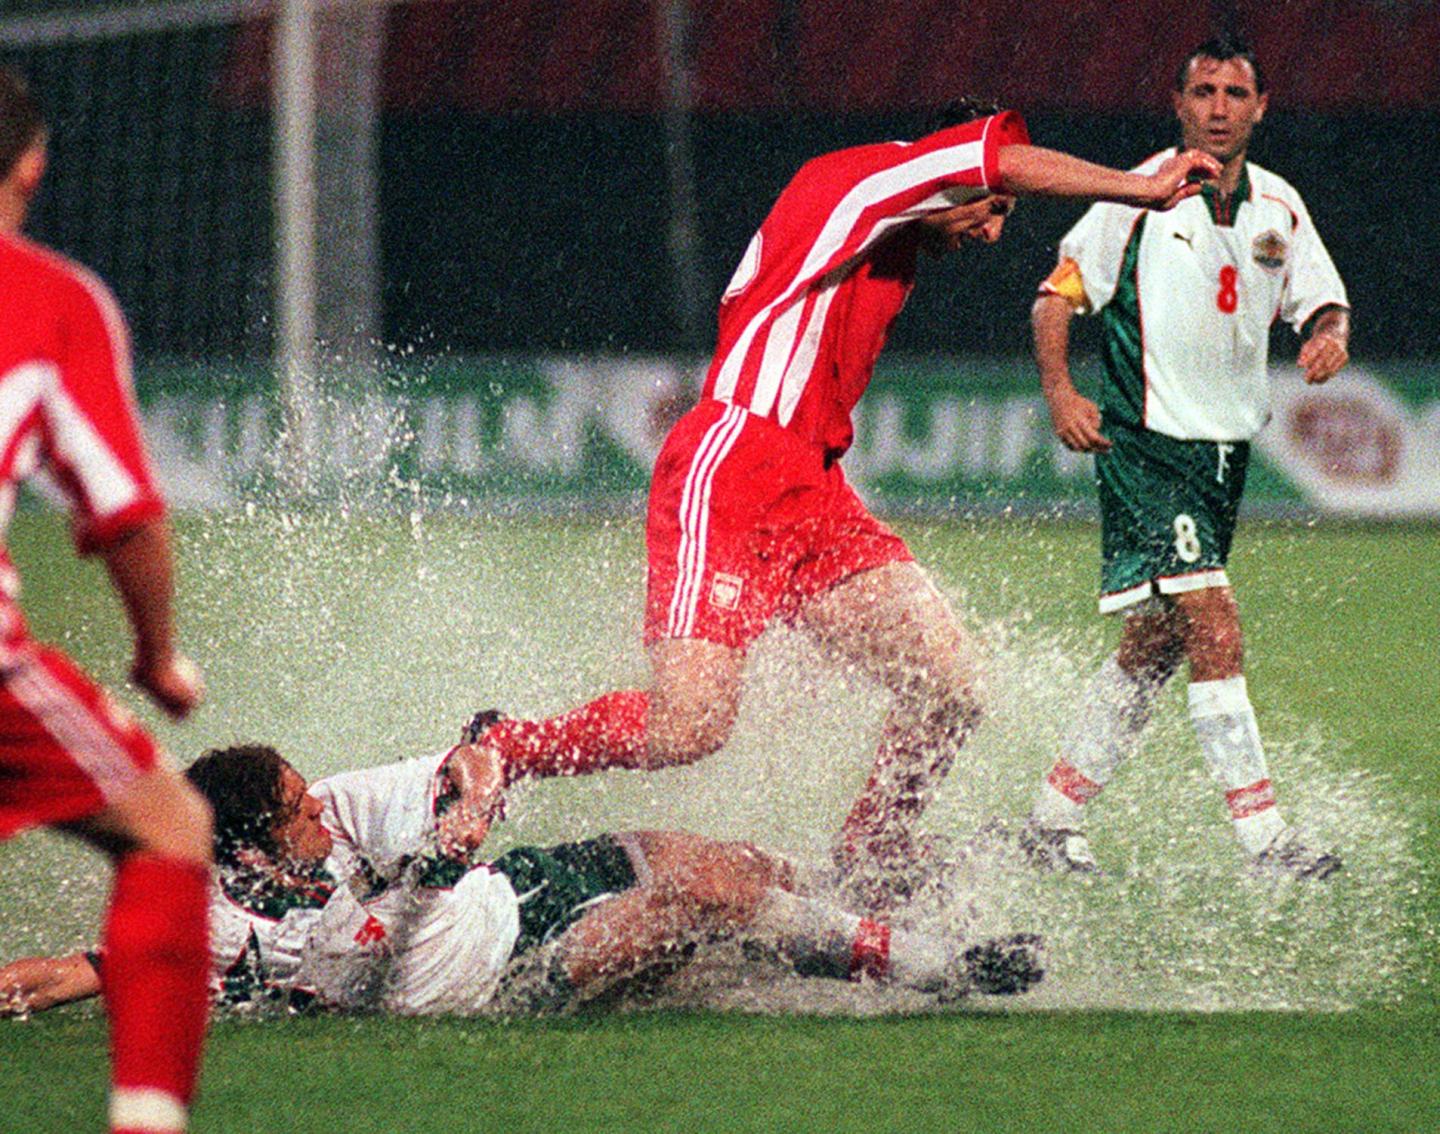 Polska - Bułgaria (04.06.1999)